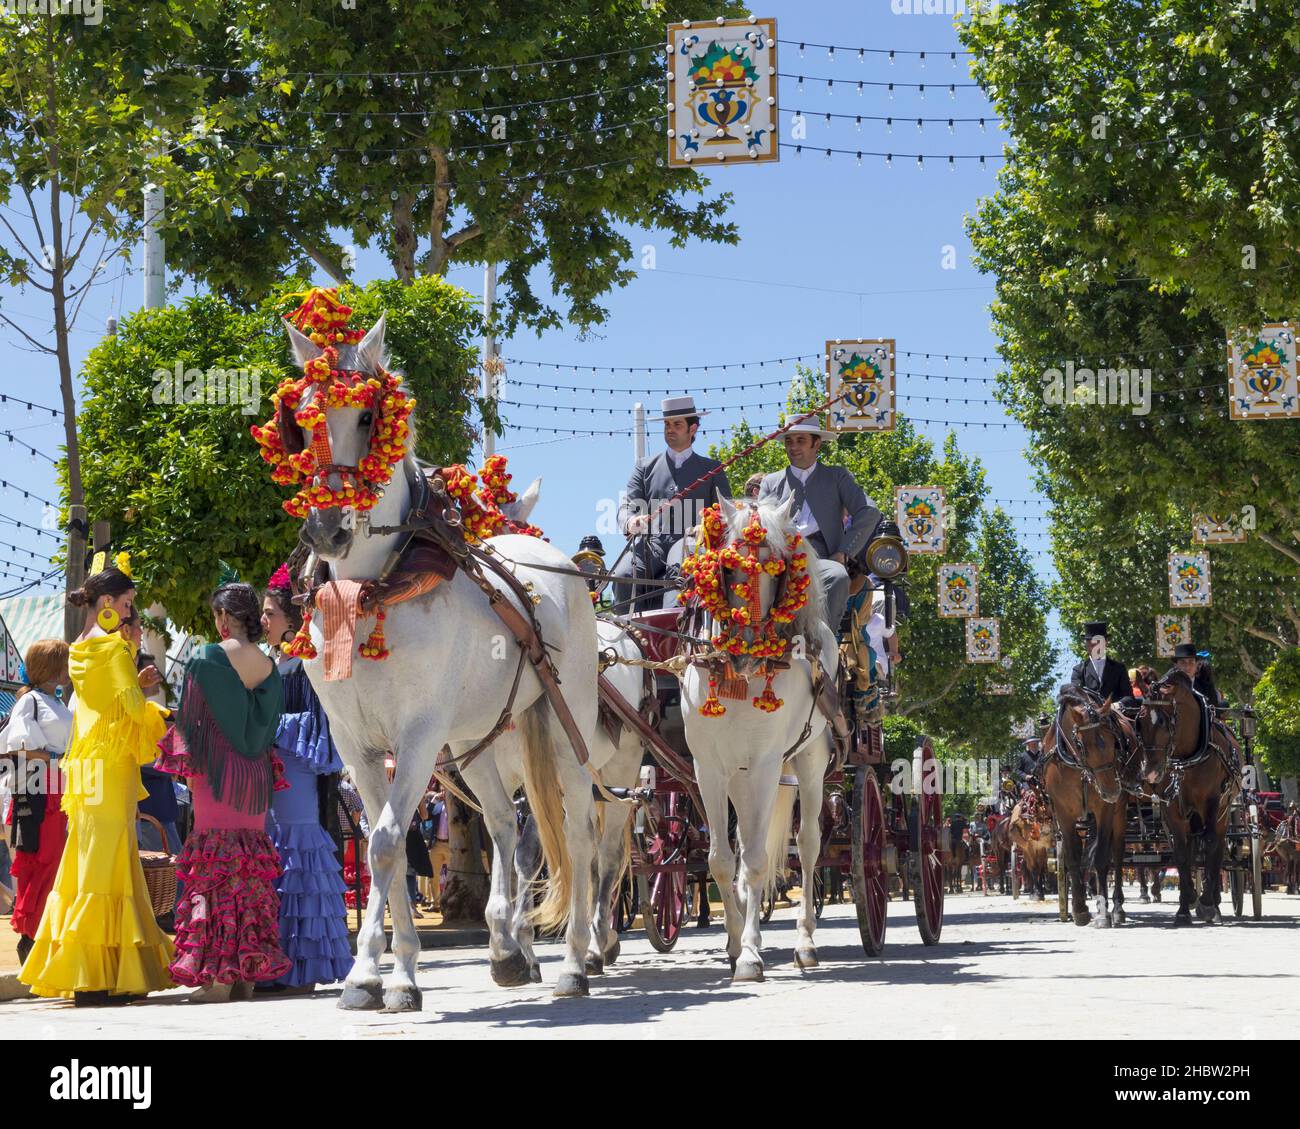 Sevilla, provincia de Sevilla, Andalucía, sur de España. Feria de Abril, la Feria de Abril. Desfile a caballo y en carruaje. Foto de stock